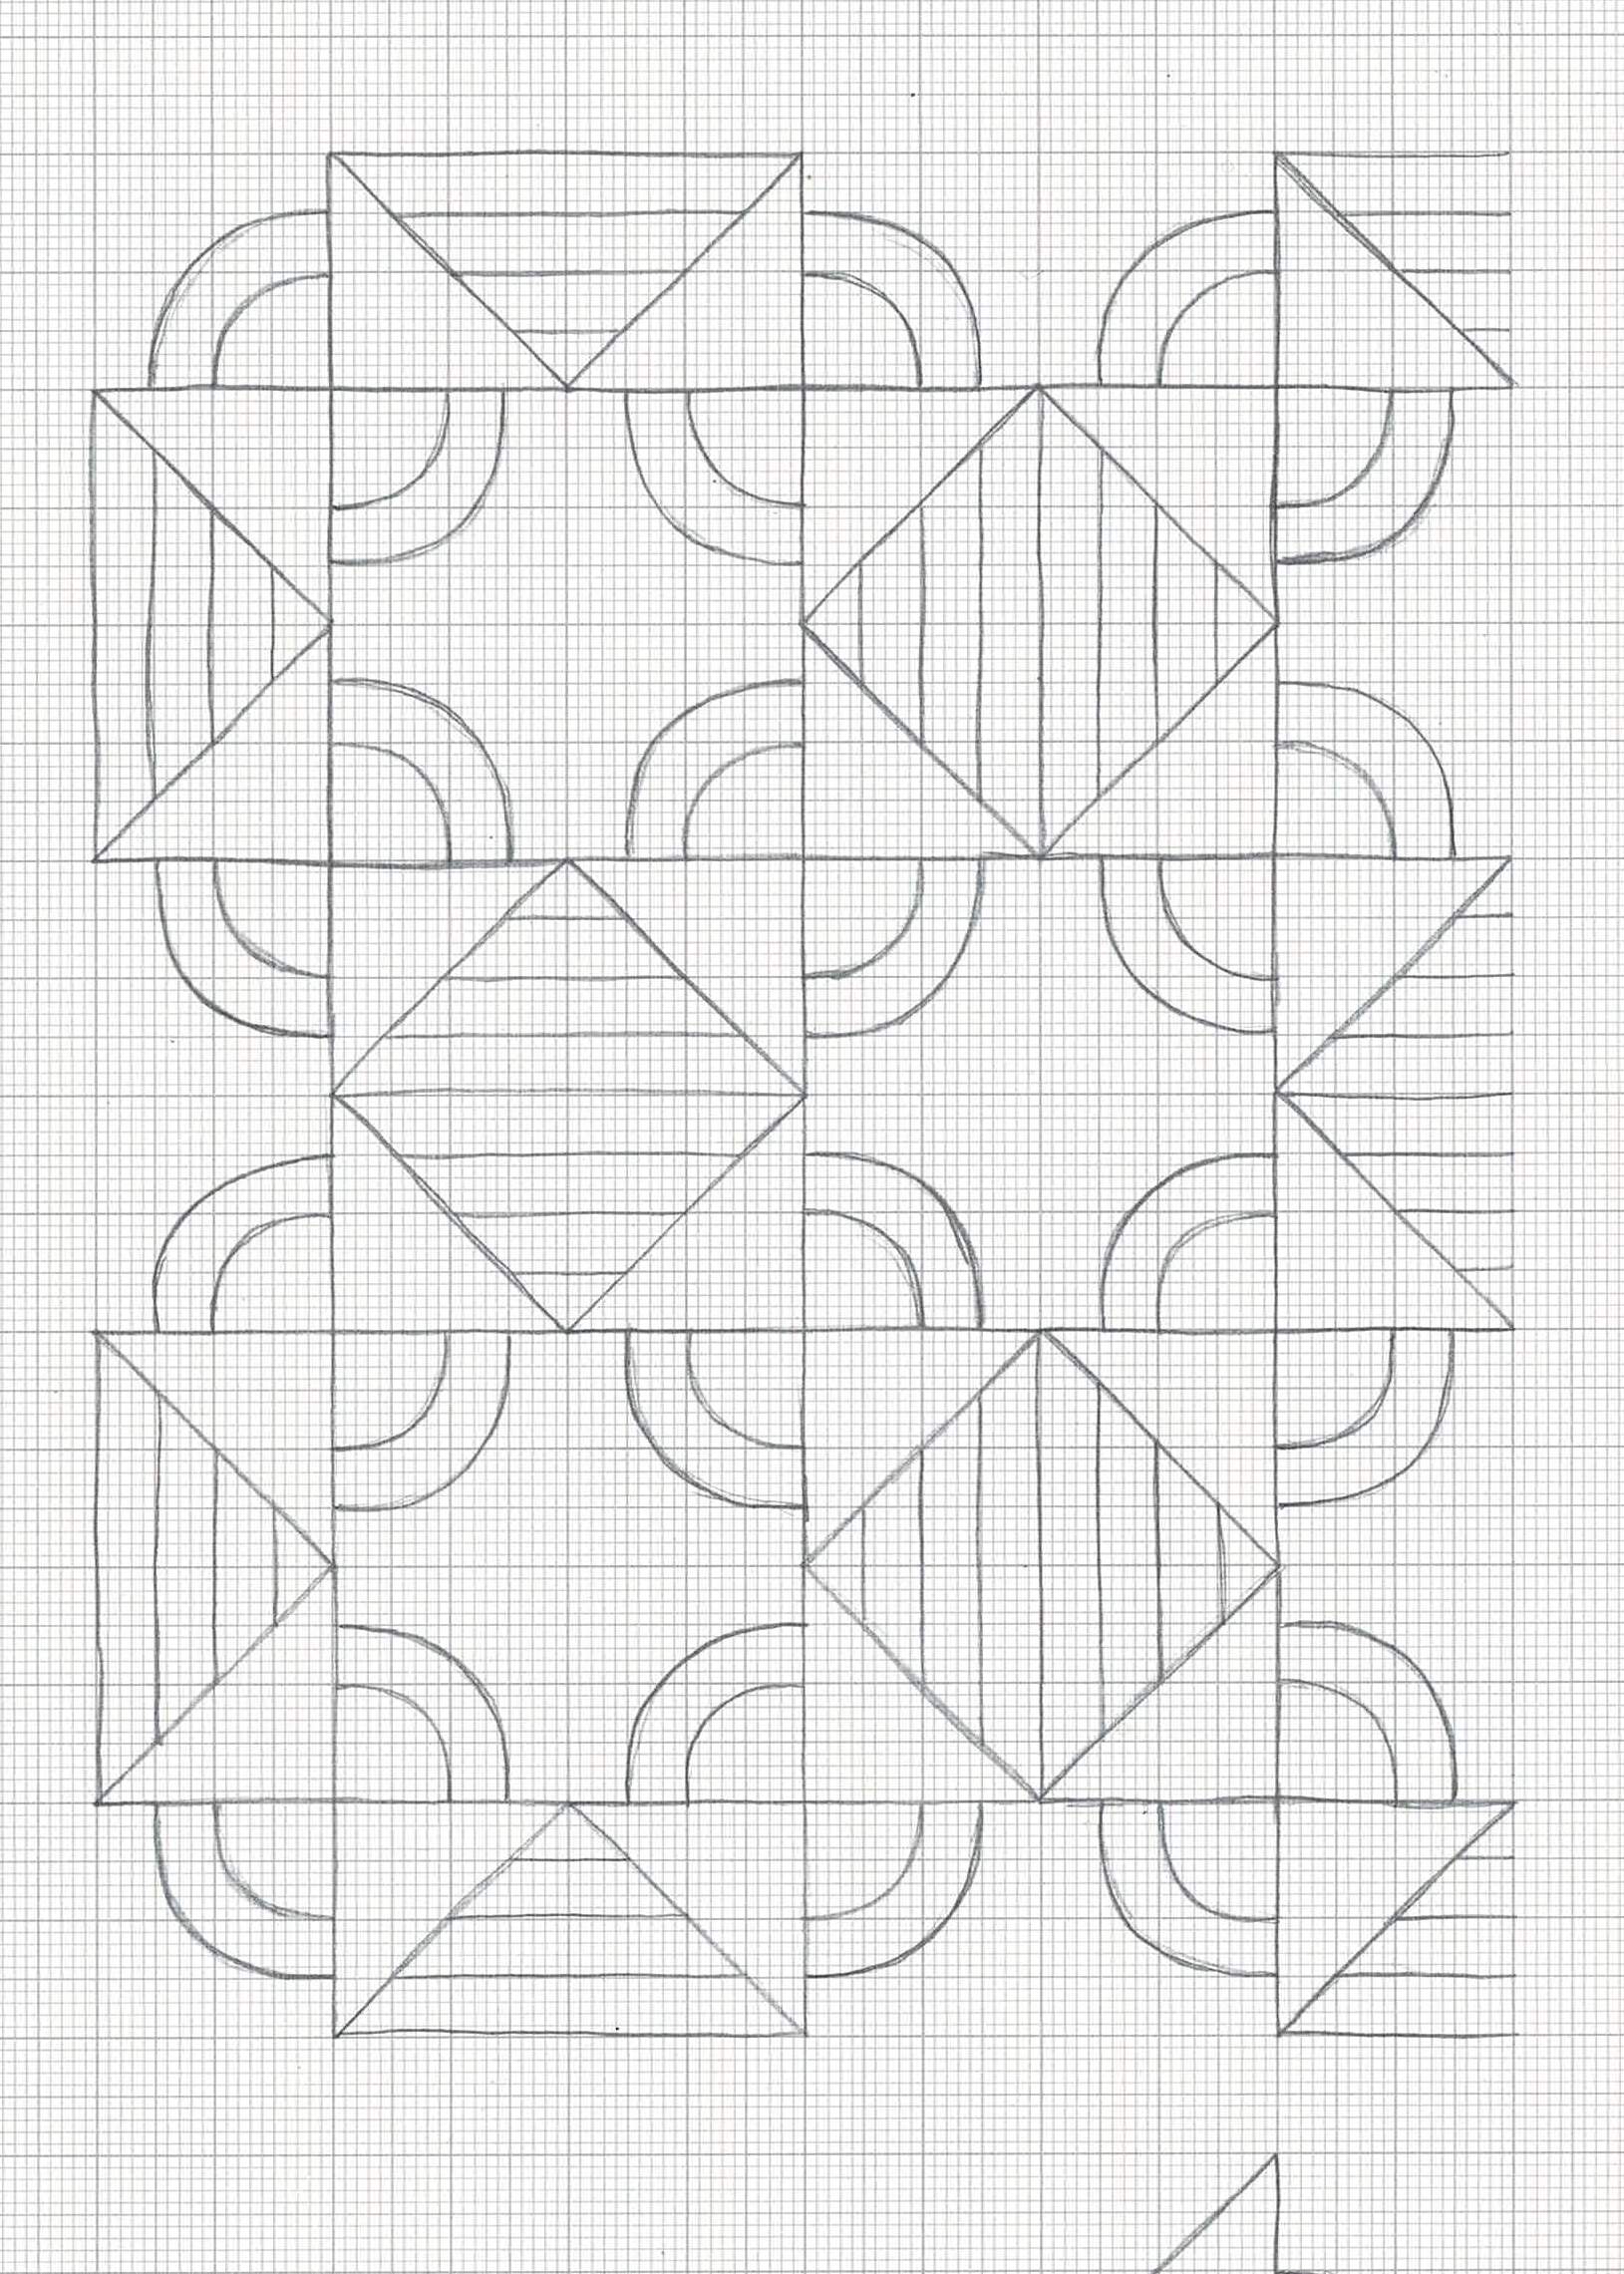 Repeat pattern, pencil, 2023.